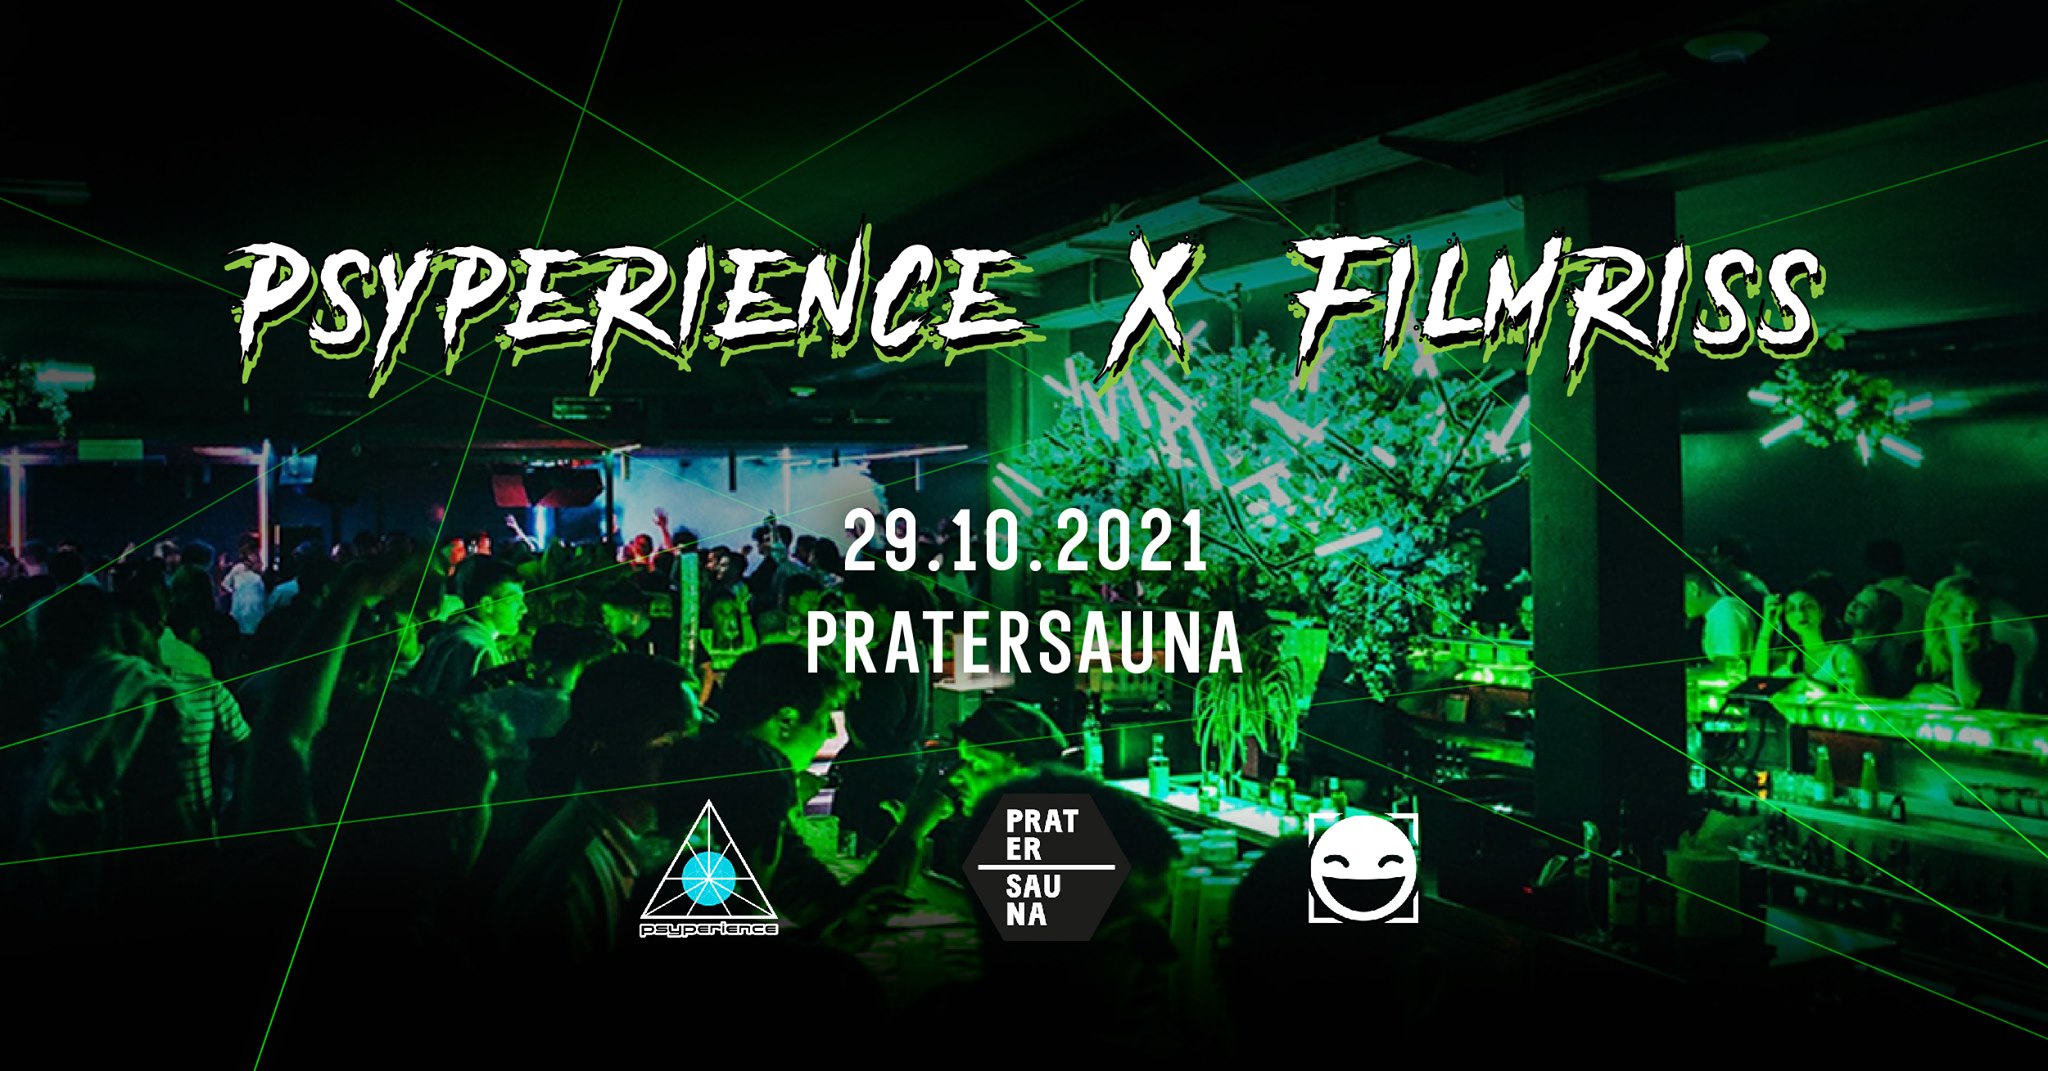 Psyperience X Filmriss w/ LsDirty & Ling Ling am 29. October 2021 @ Pratersauna.